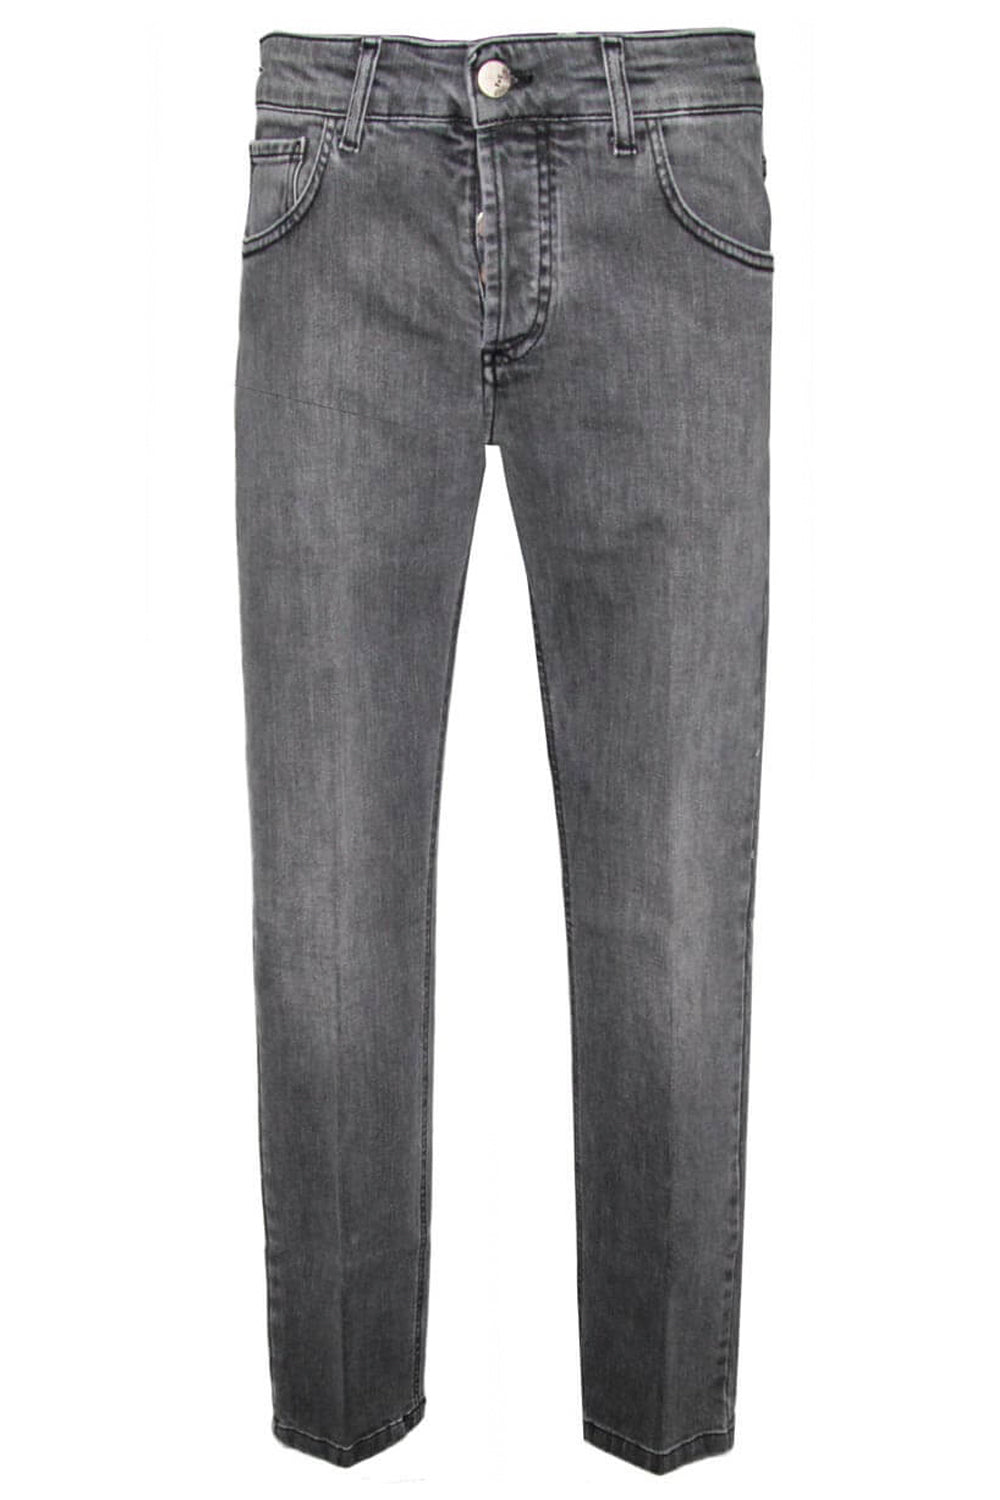 Image of PANTALONE jeans grigio- ENTRE AMIS